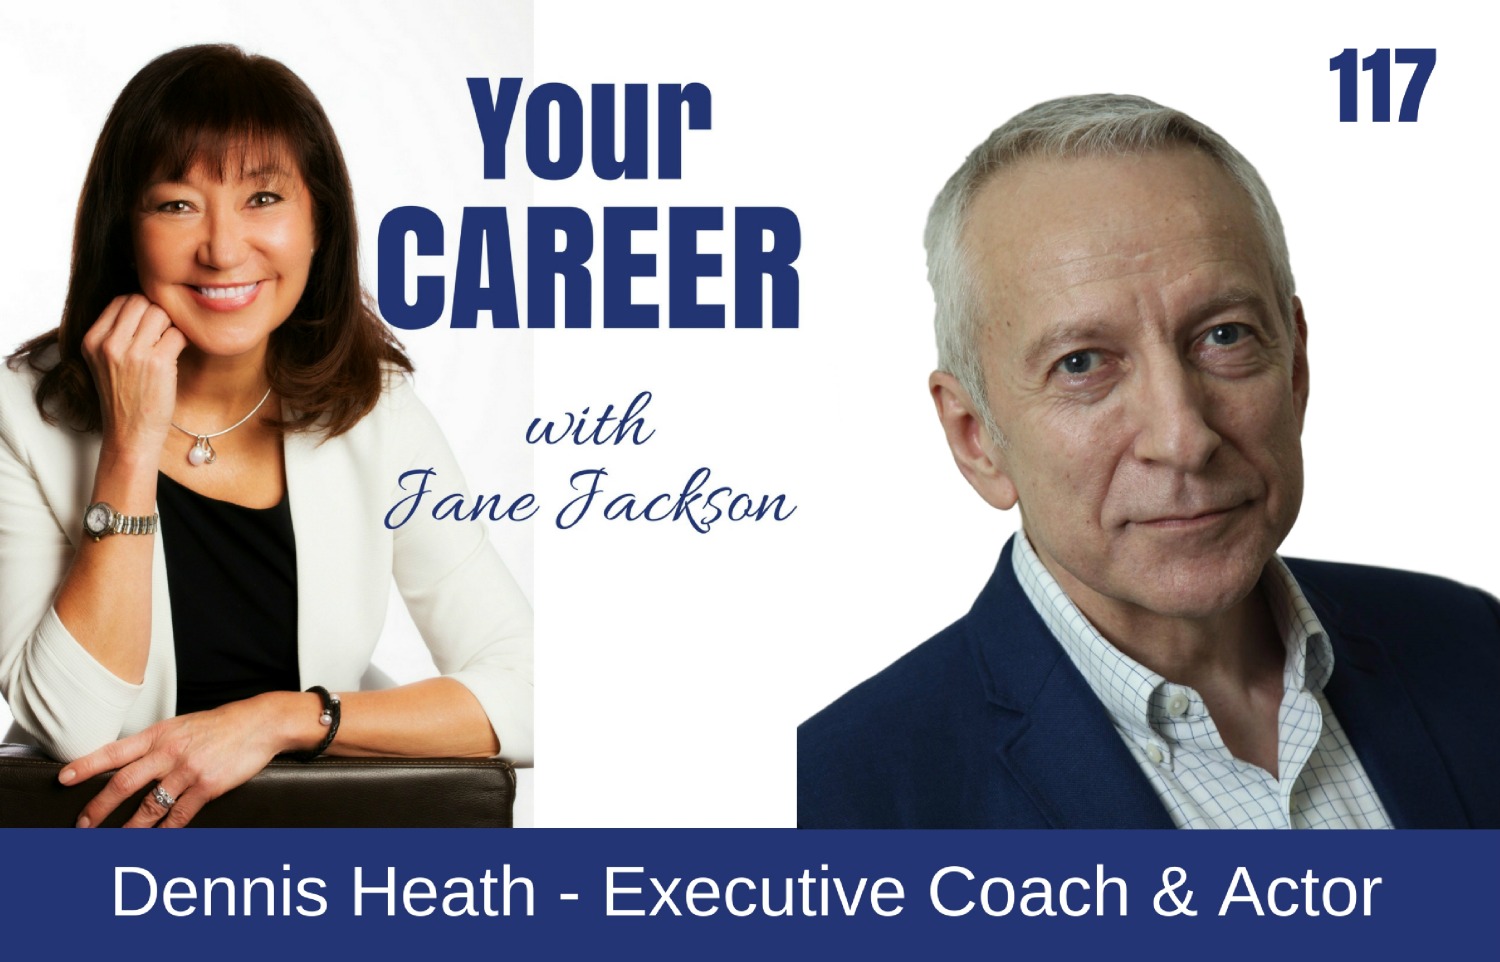 Dennis Heath, executive coach, career coach, actor, jane jackson, careers, jane jackson coach